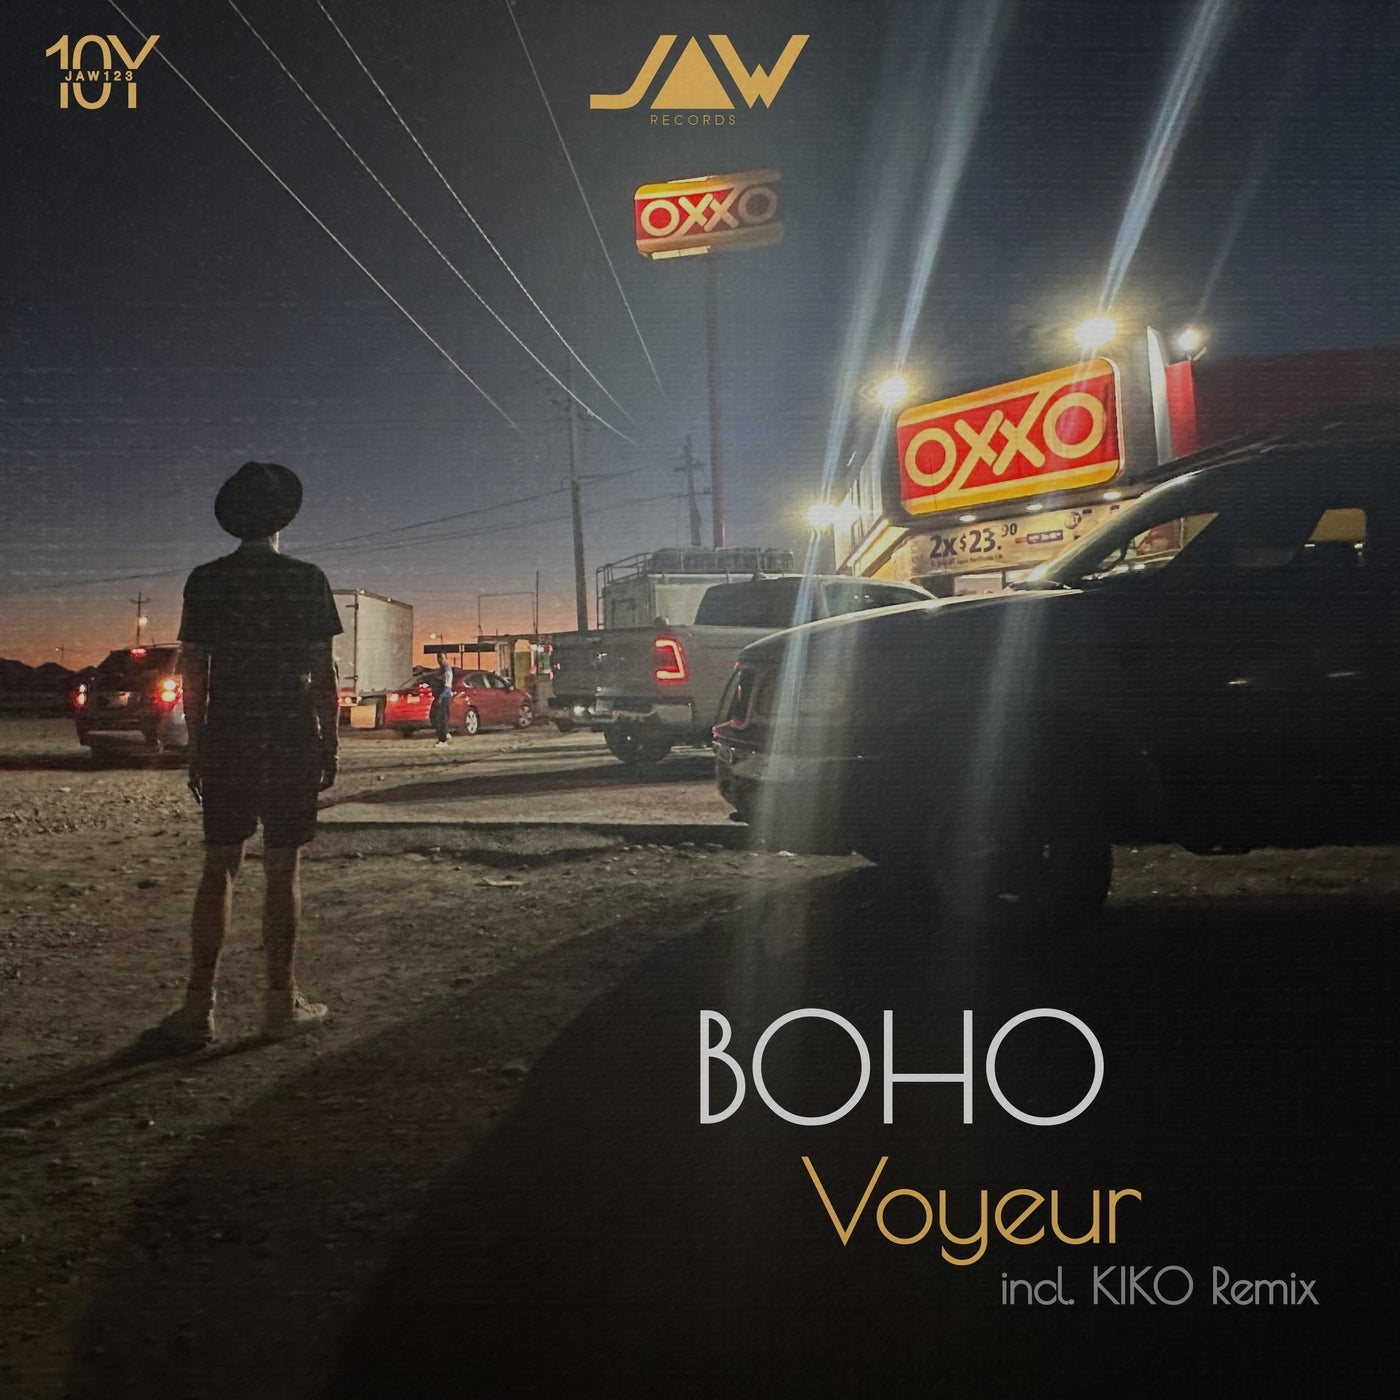 image cover: BOHO - Voyeur on Jannowitz Records